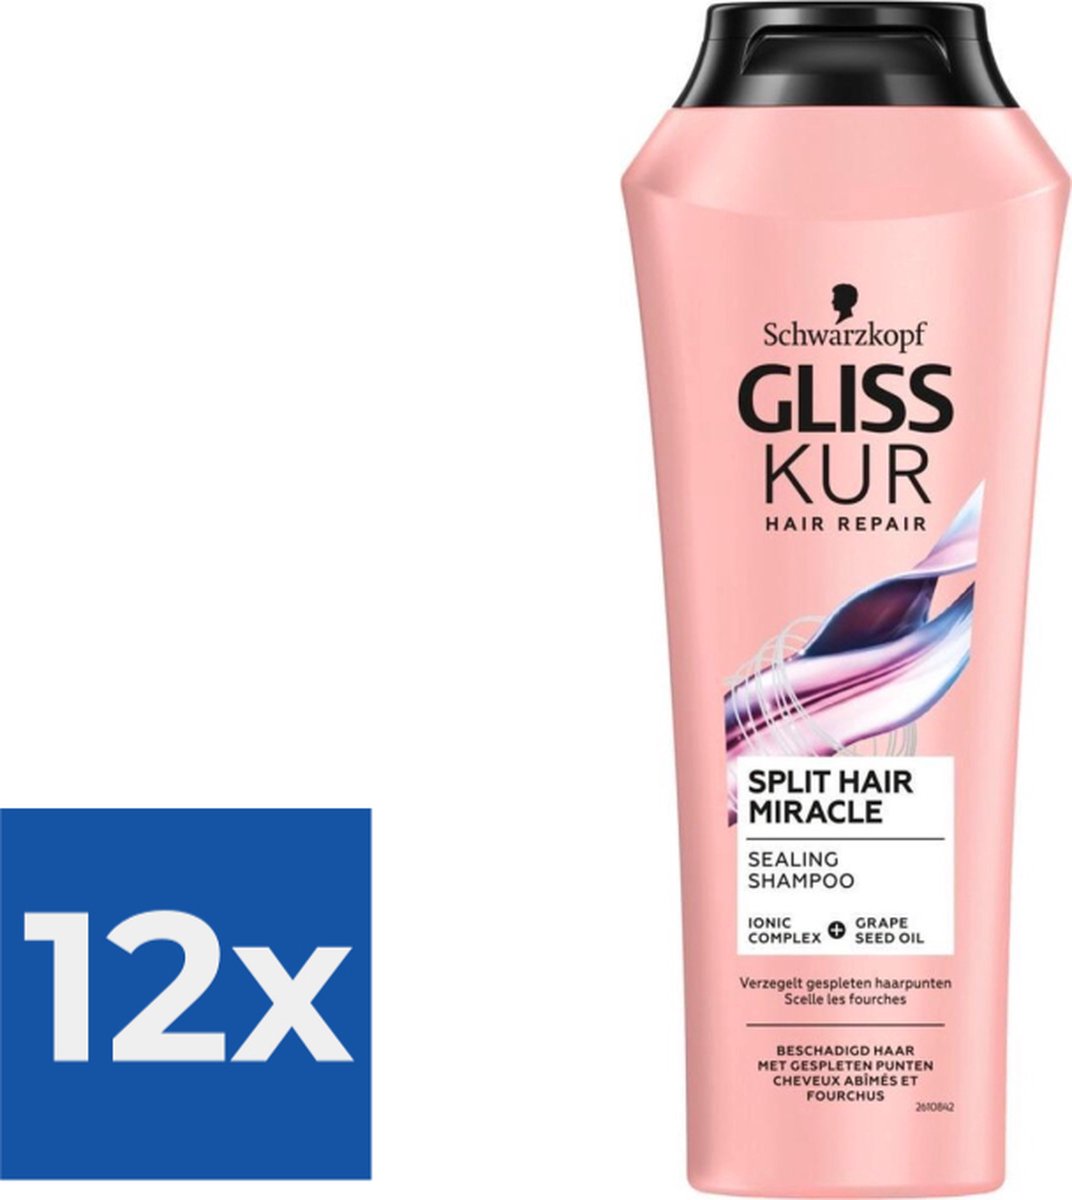 Gliss Kur Split End Shampoo 250 ml - Voordeelverpakking 12 stuks